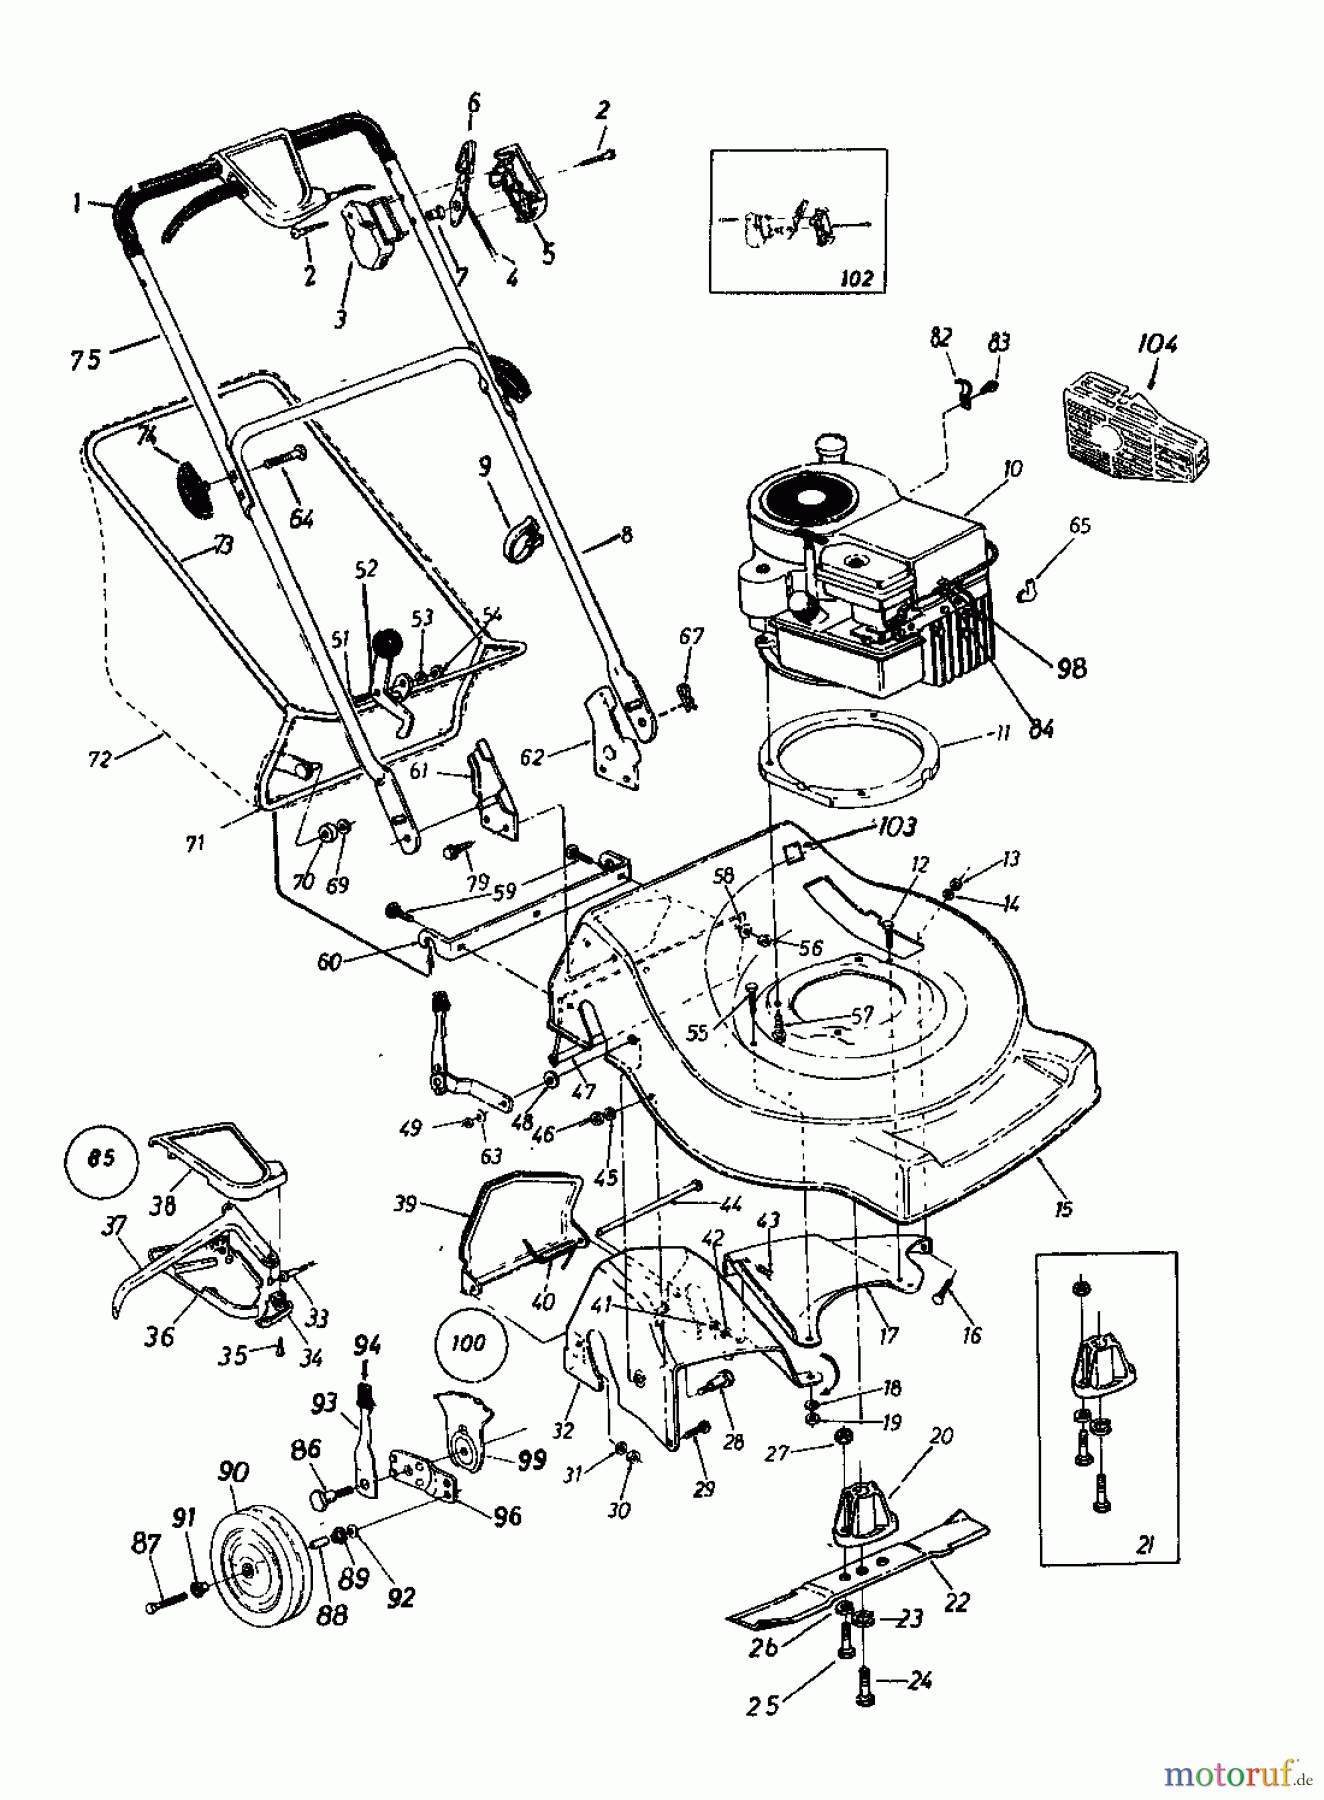  Columbia Petrol mower self propelled RD 51 SSL 127-3590  (1987) Basic machine